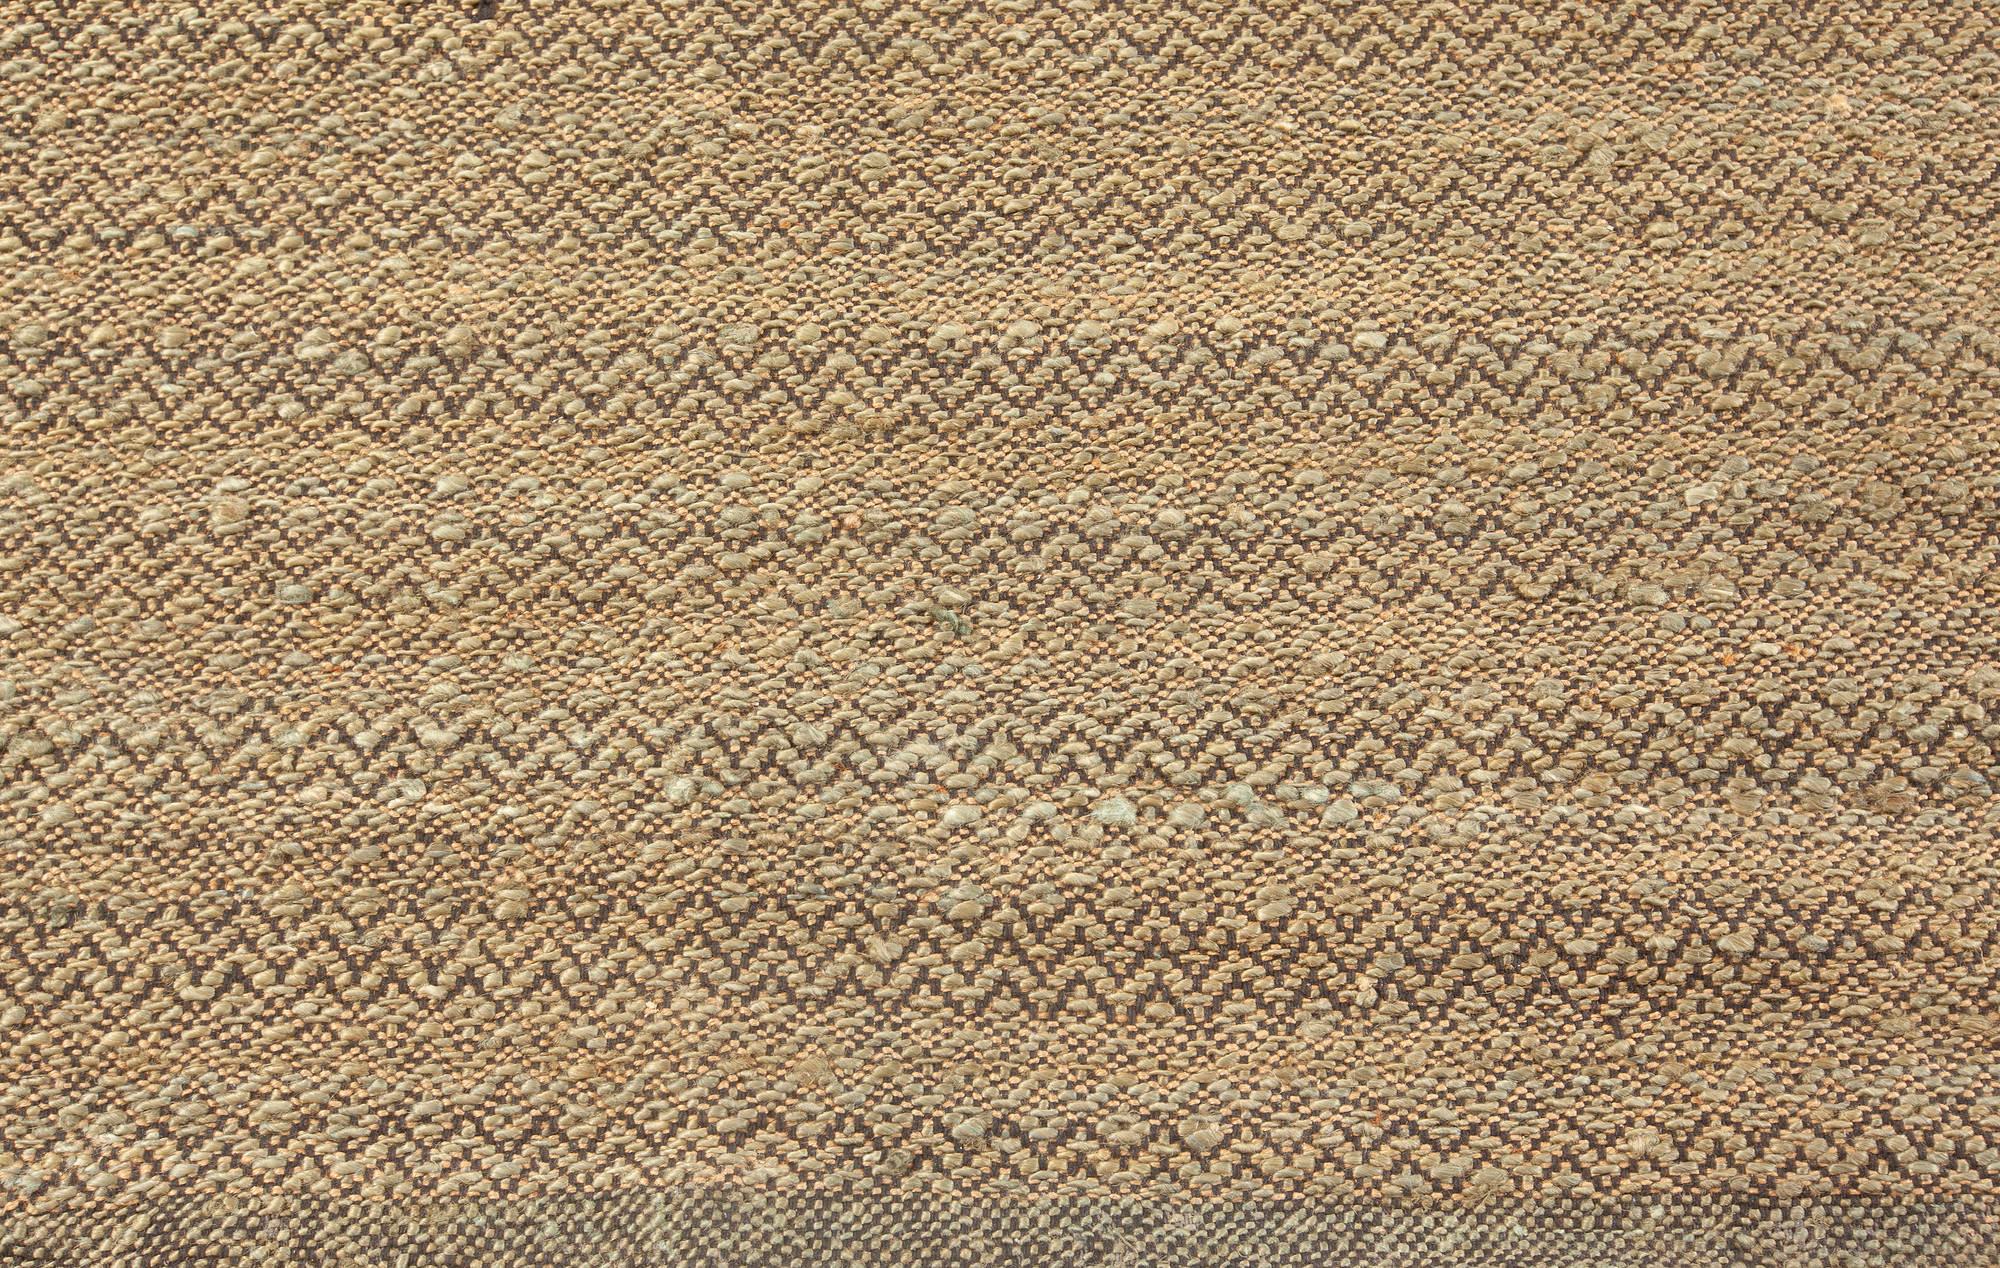 Hand-Woven Contemporary Natural Fiber Flat Weave Rug by Doris Leslie Blau For Sale